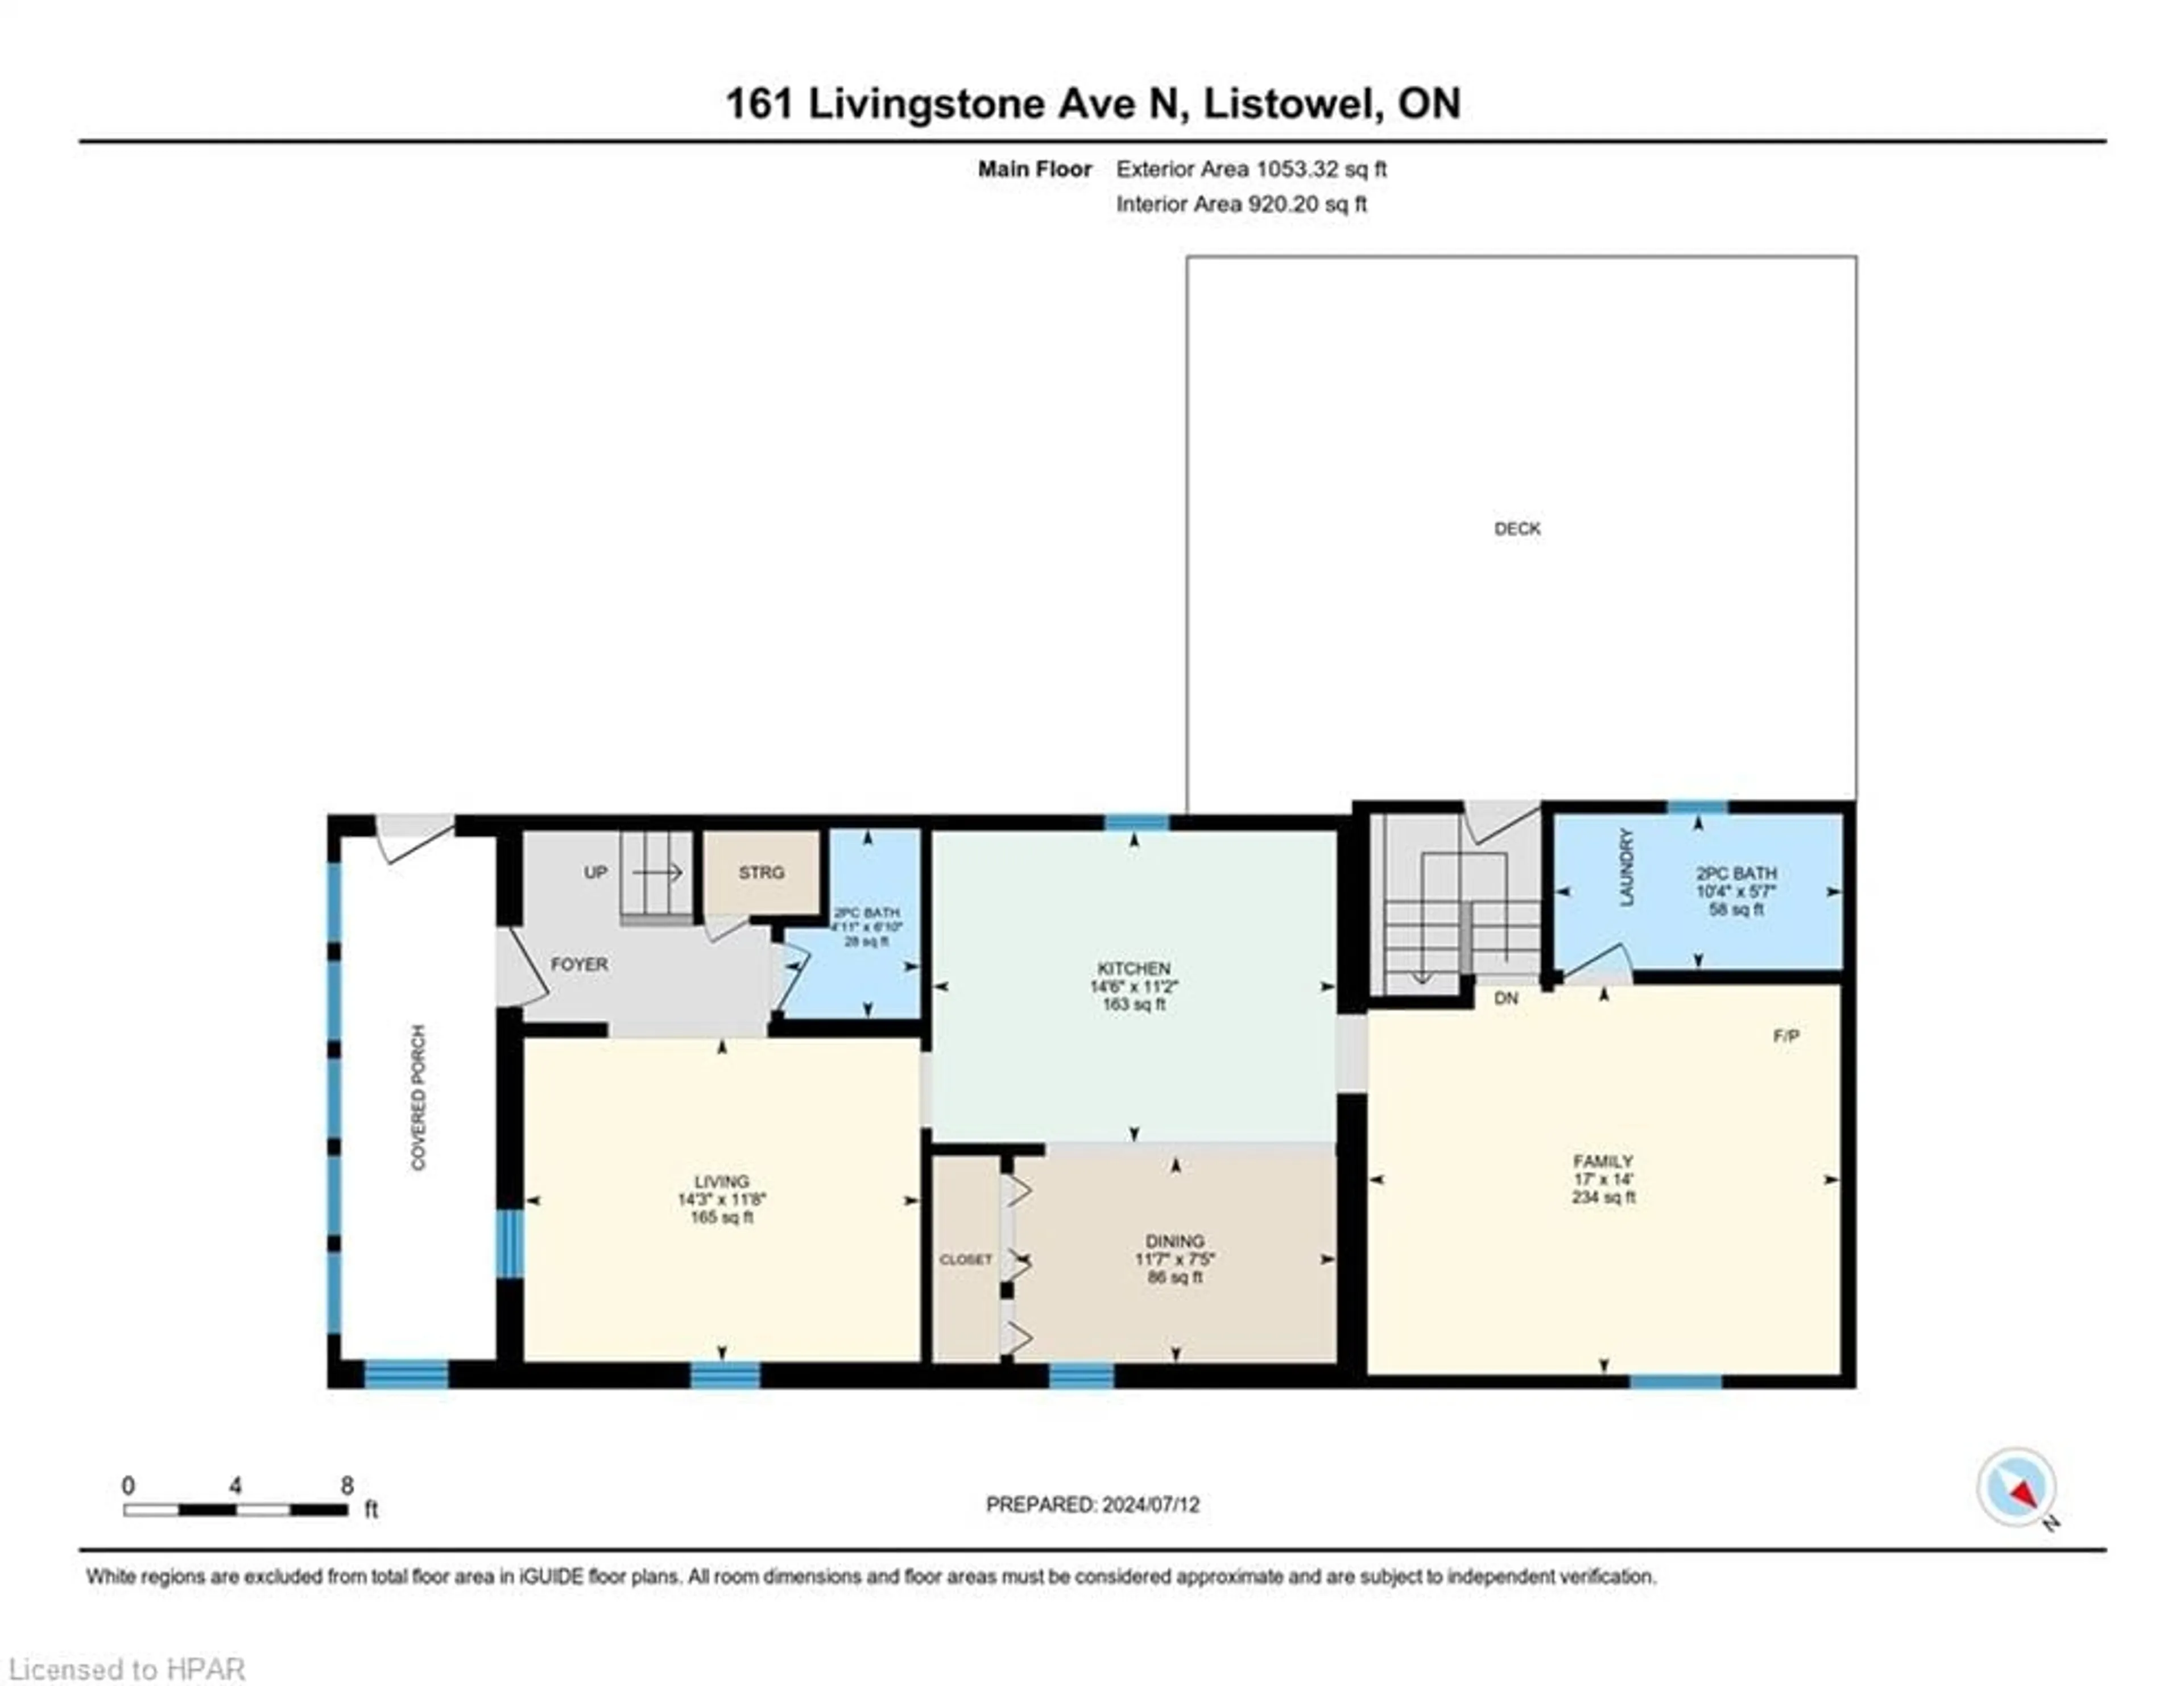 Floor plan for 161 Livingstone Ave, Listowel Ontario N4W 1P6